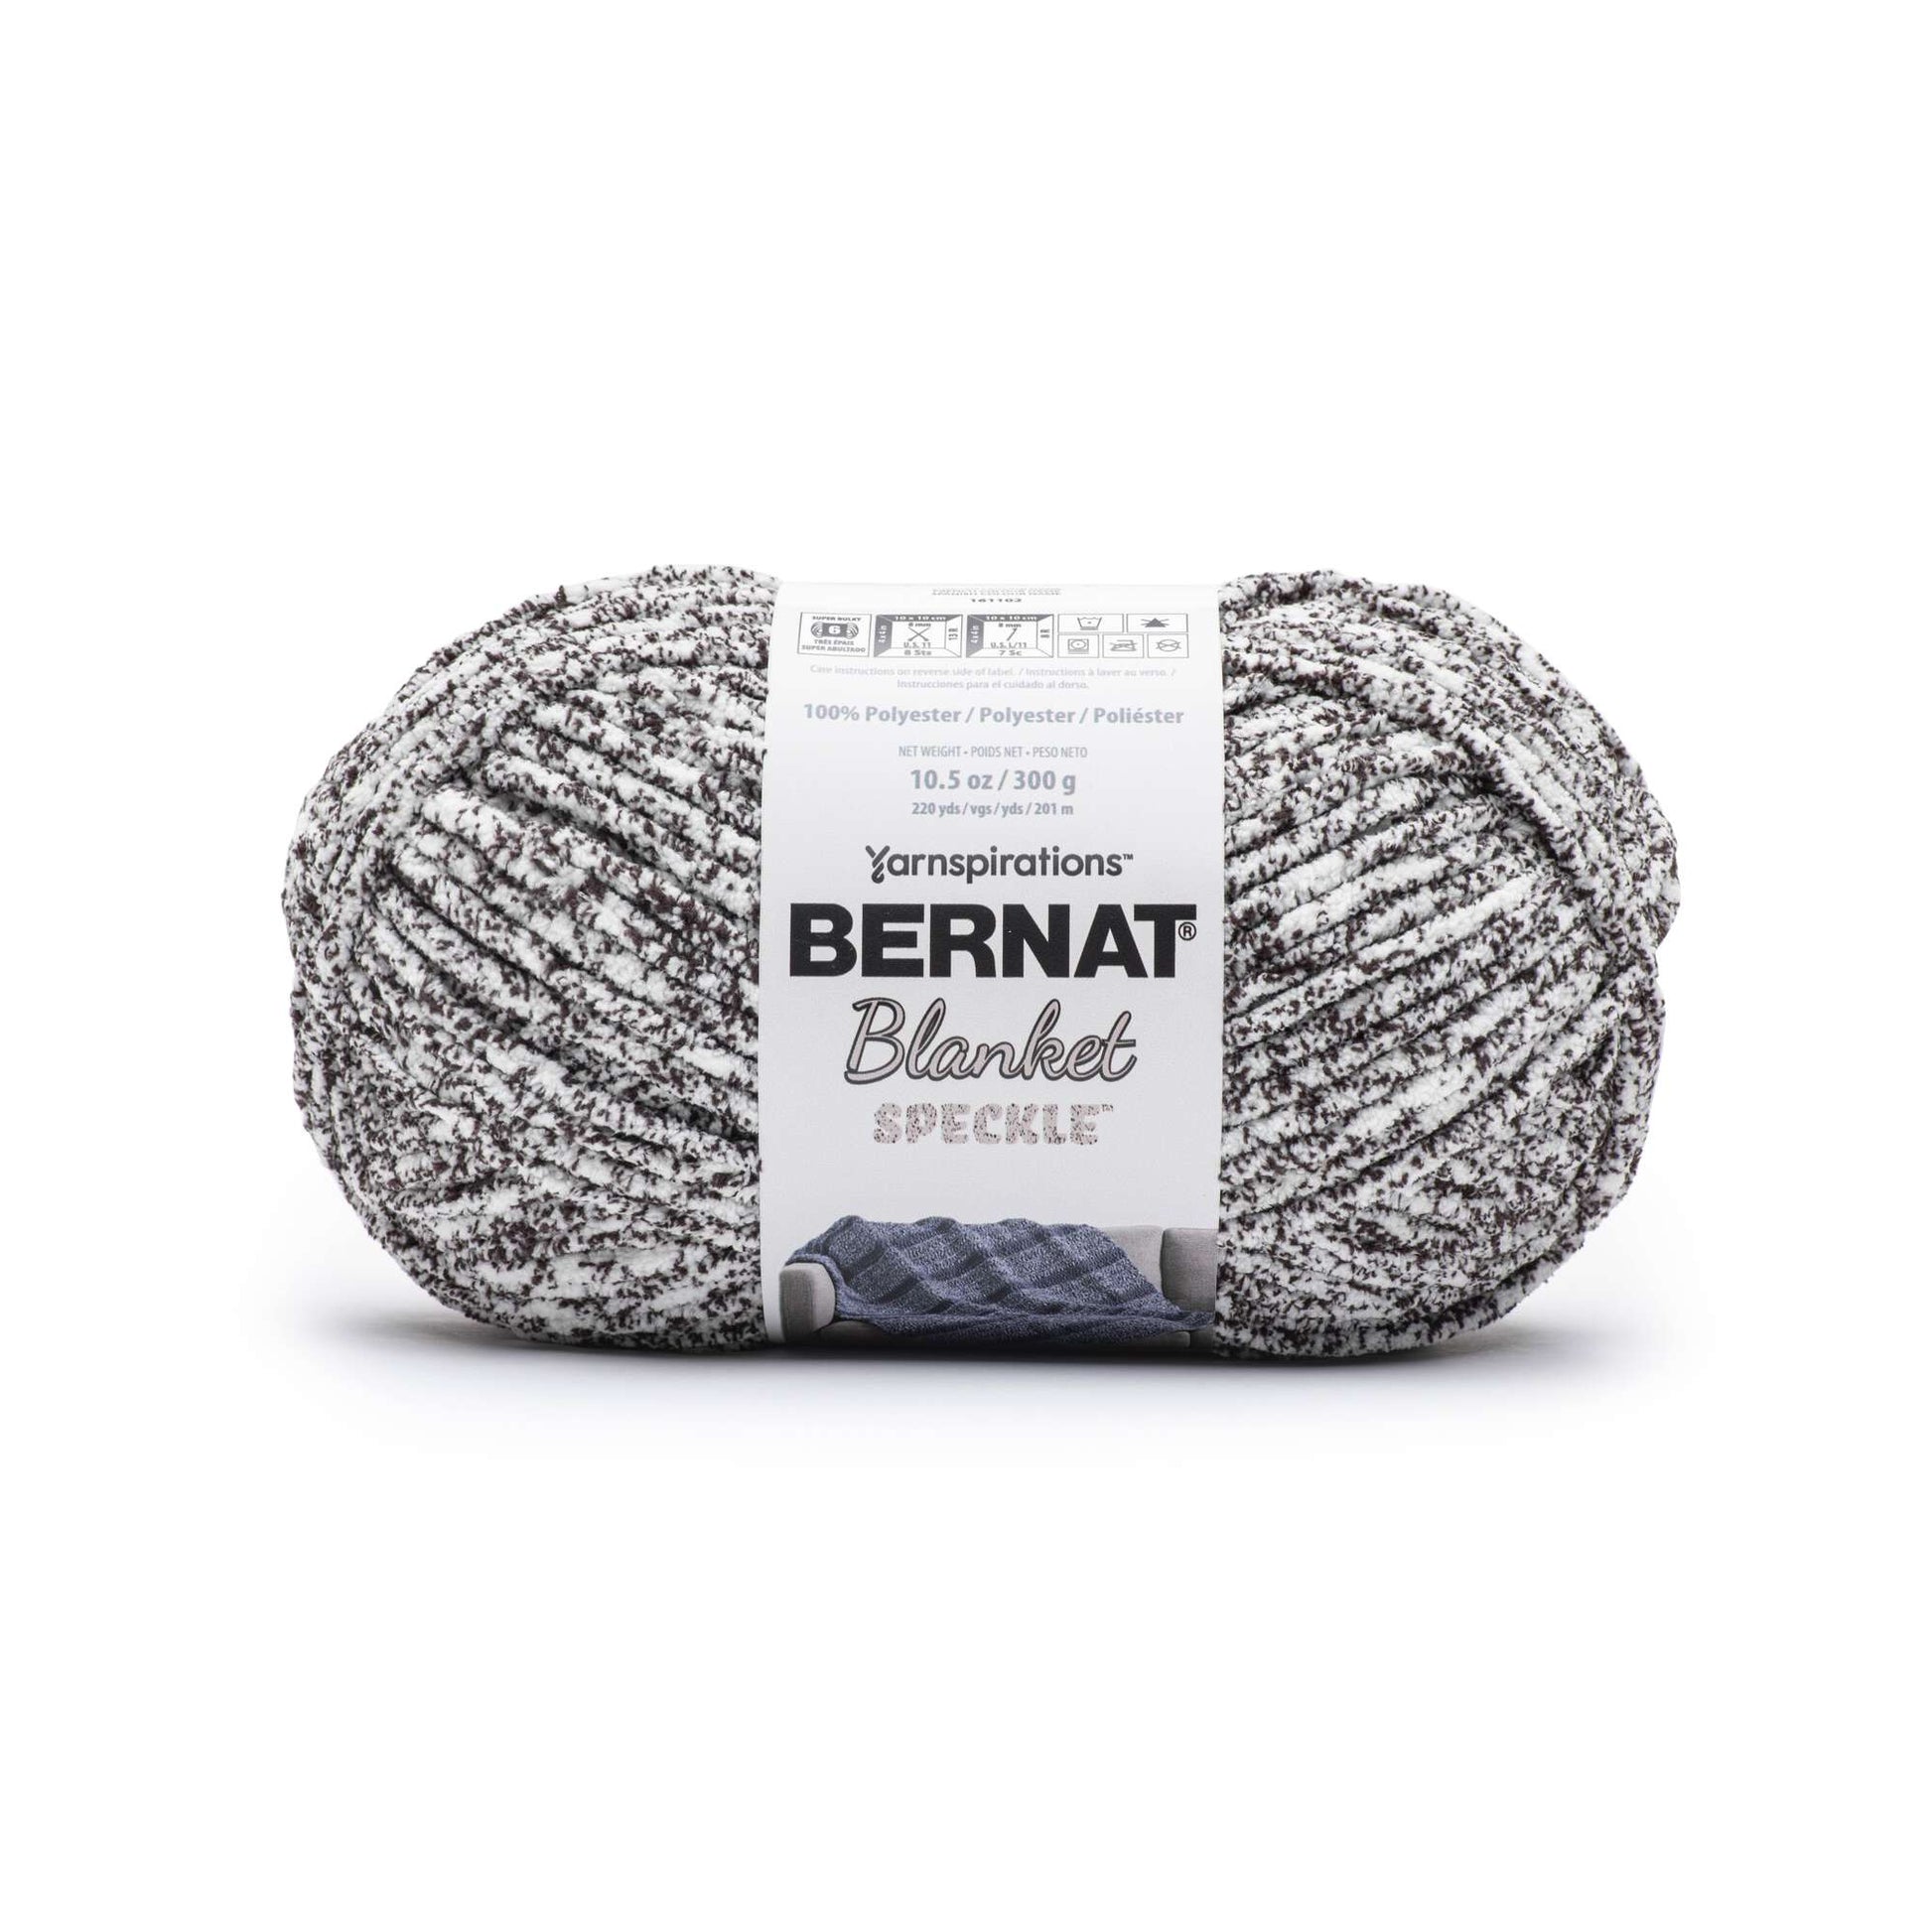 Bernat Blanket Speckle Yarn (300g/10.5oz)